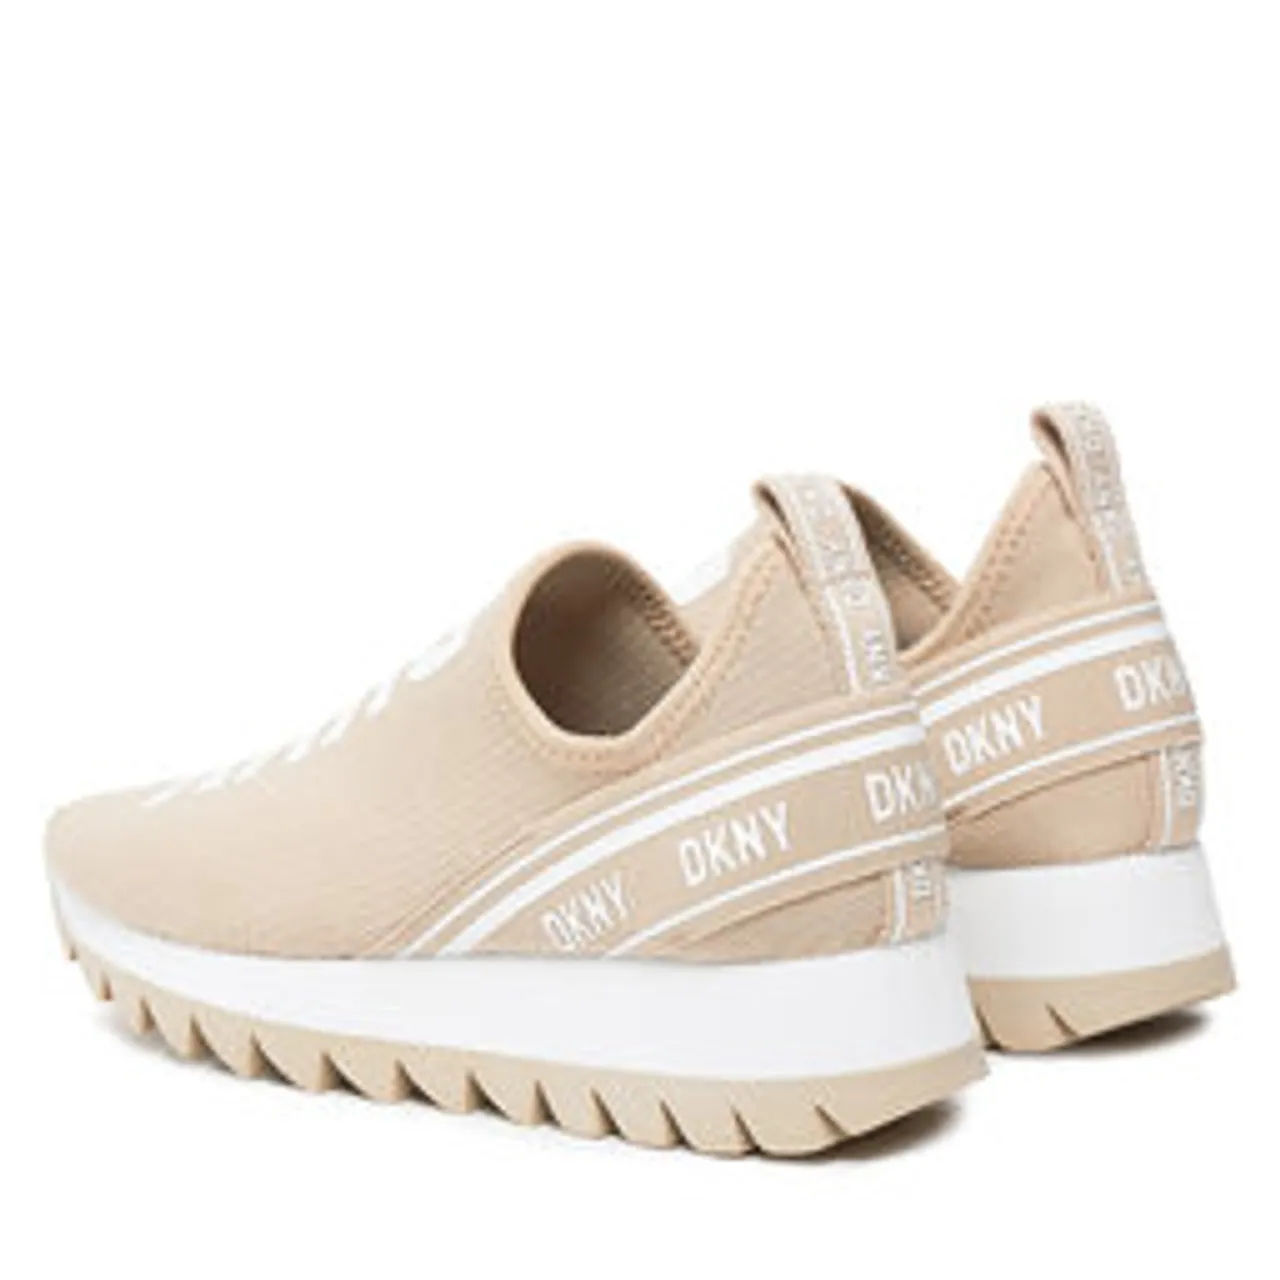 Sneakers DKNY Abbi Slip On K1457946 Hmptn Chn/Wht